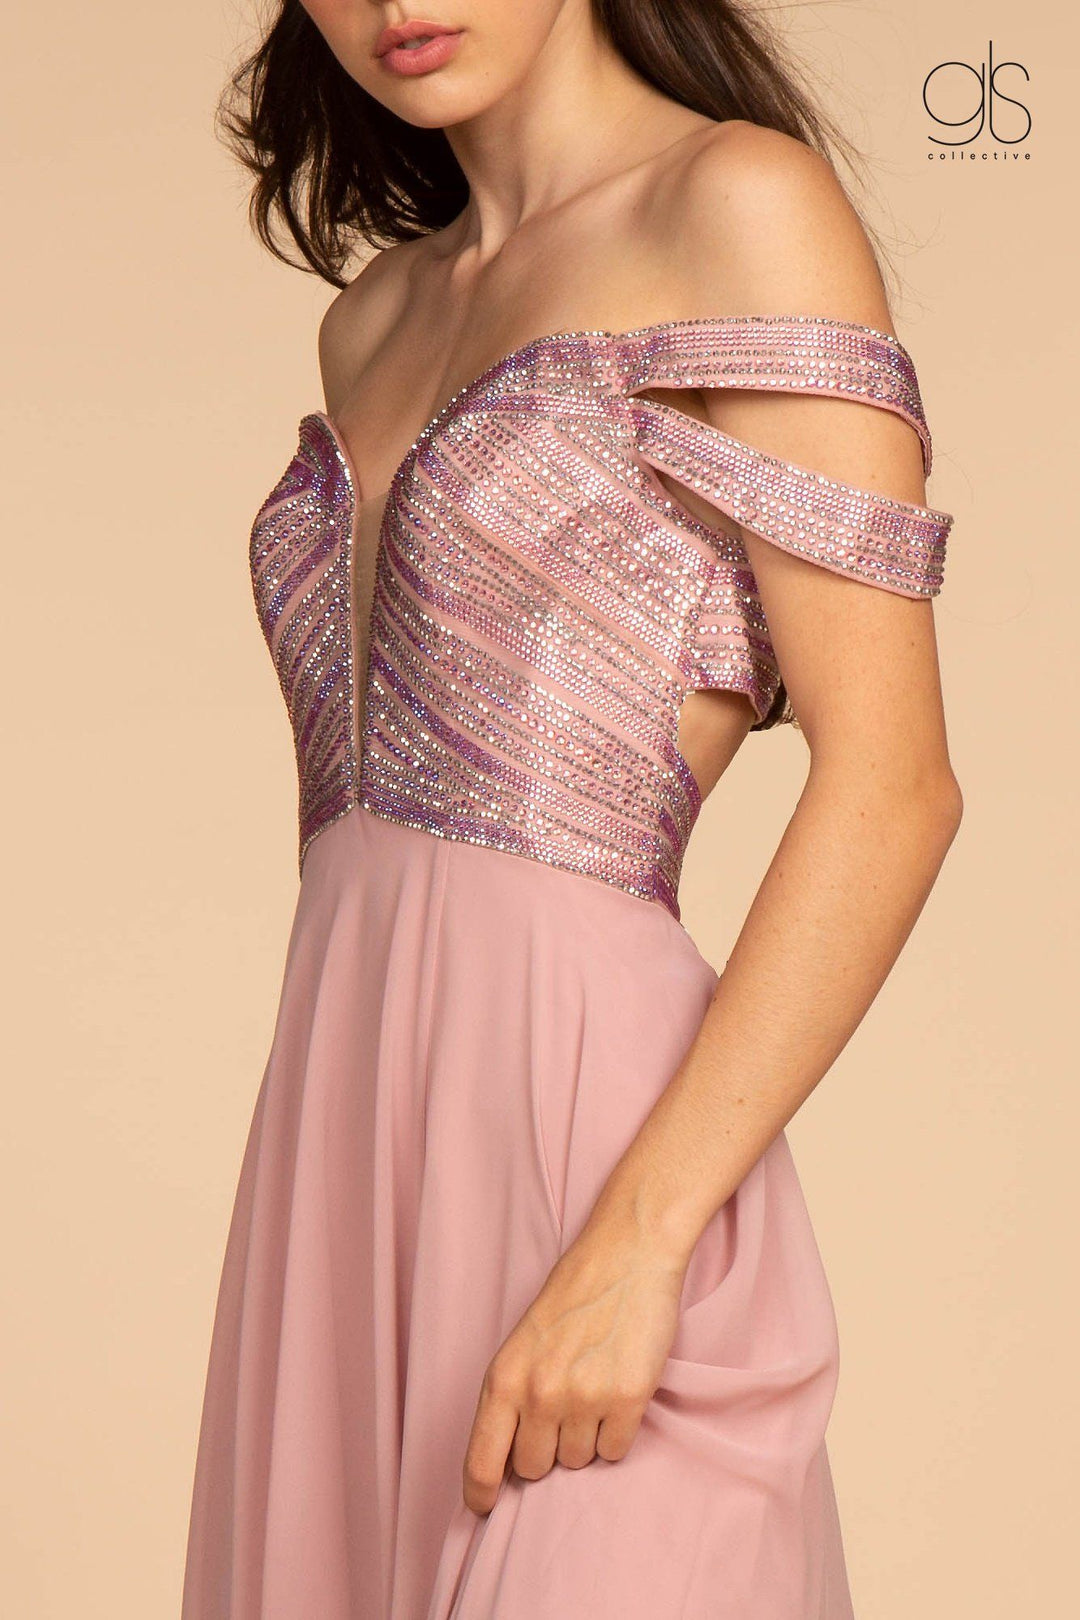 Long Off Shoulder Dress with Jeweled Bodice by Elizabeth K GL2527-Long Formal Dresses-ABC Fashion